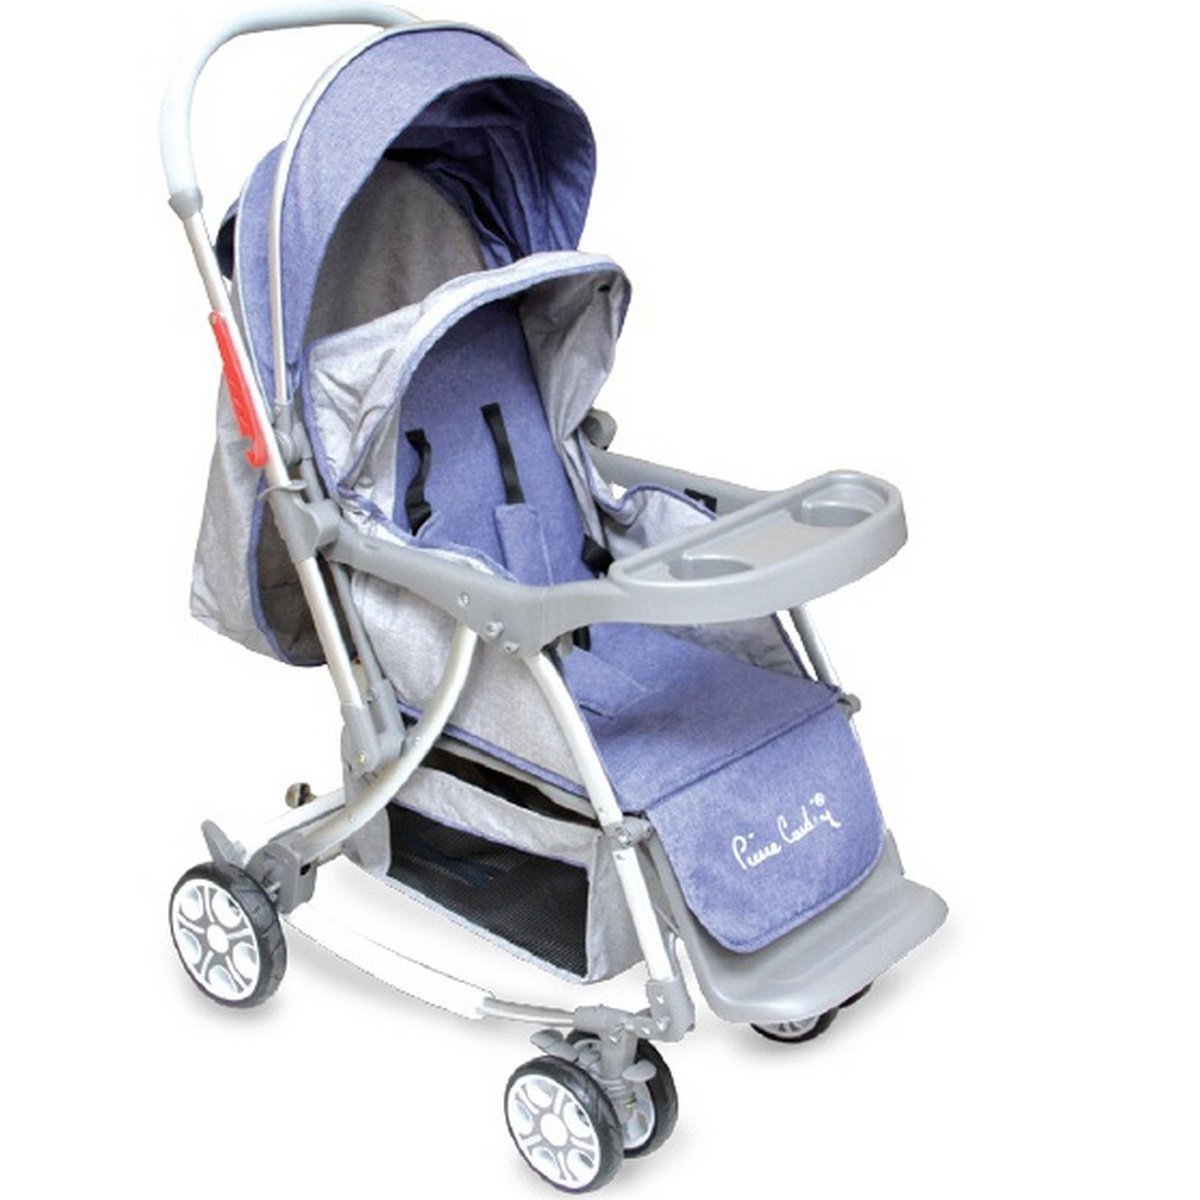 Pierre Cardin Baby Stroller PS8837 Grey